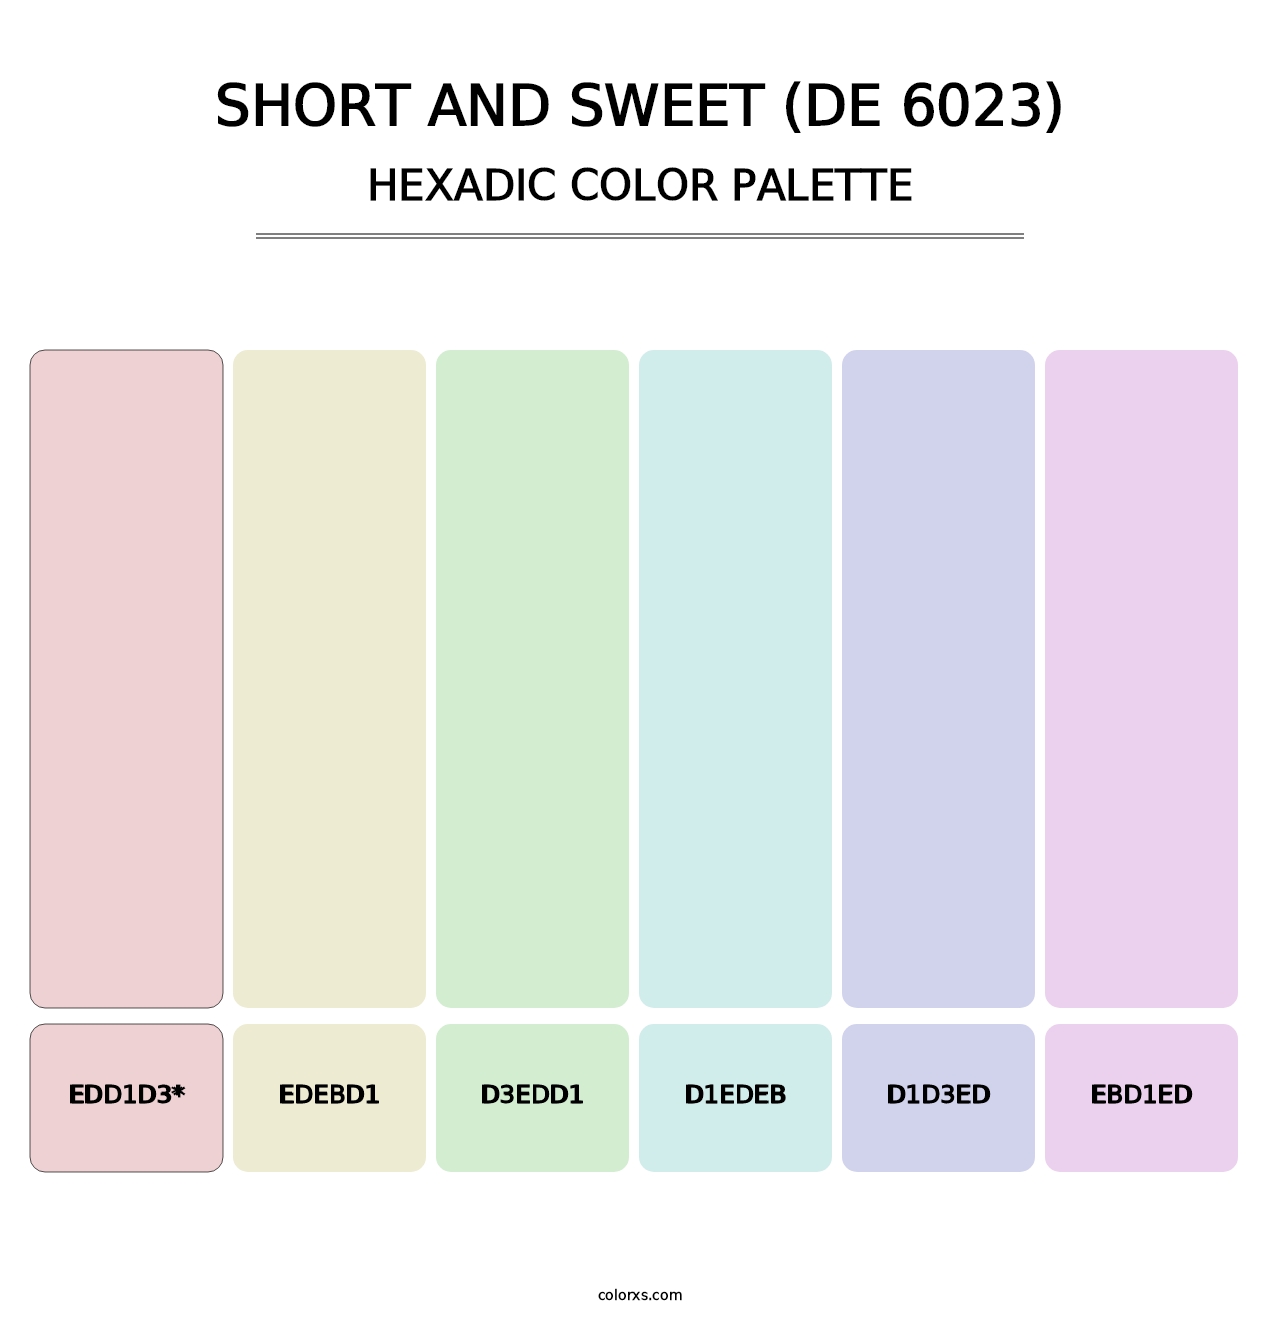 Short and Sweet (DE 6023) - Hexadic Color Palette